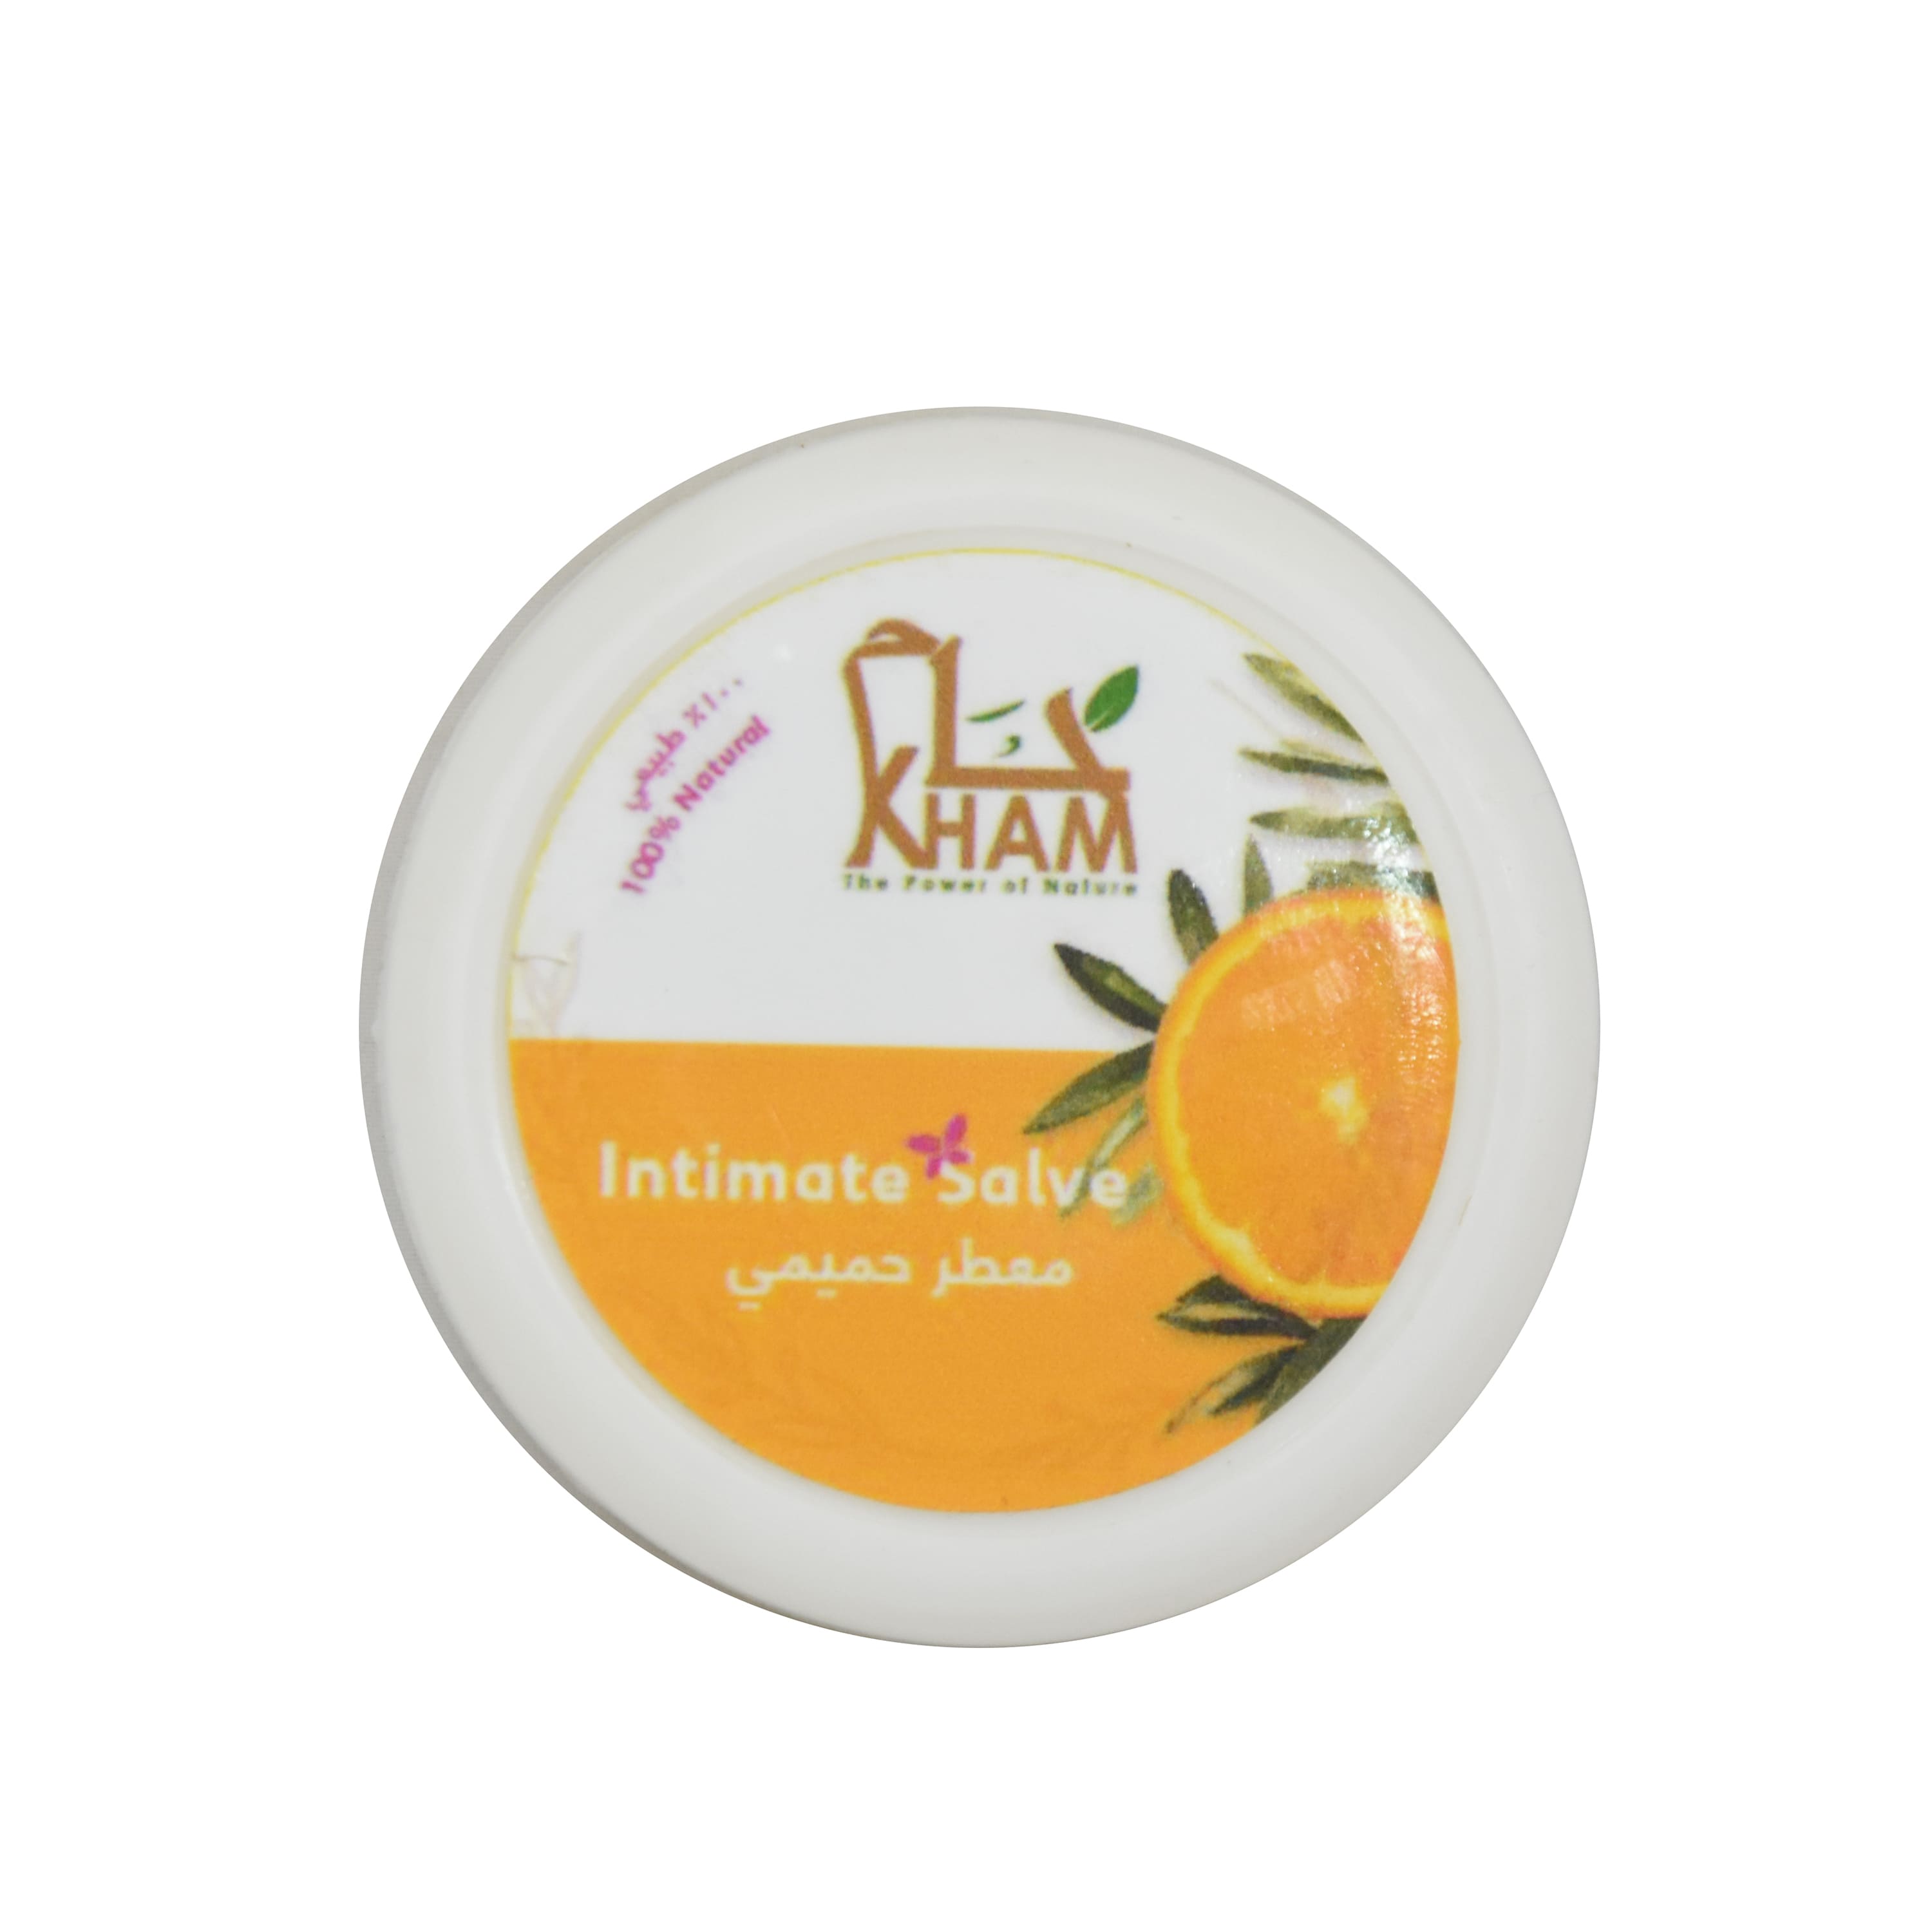 Kham Orange Intimate Salve (100 ml) To perfume and moisturize sensitive areas